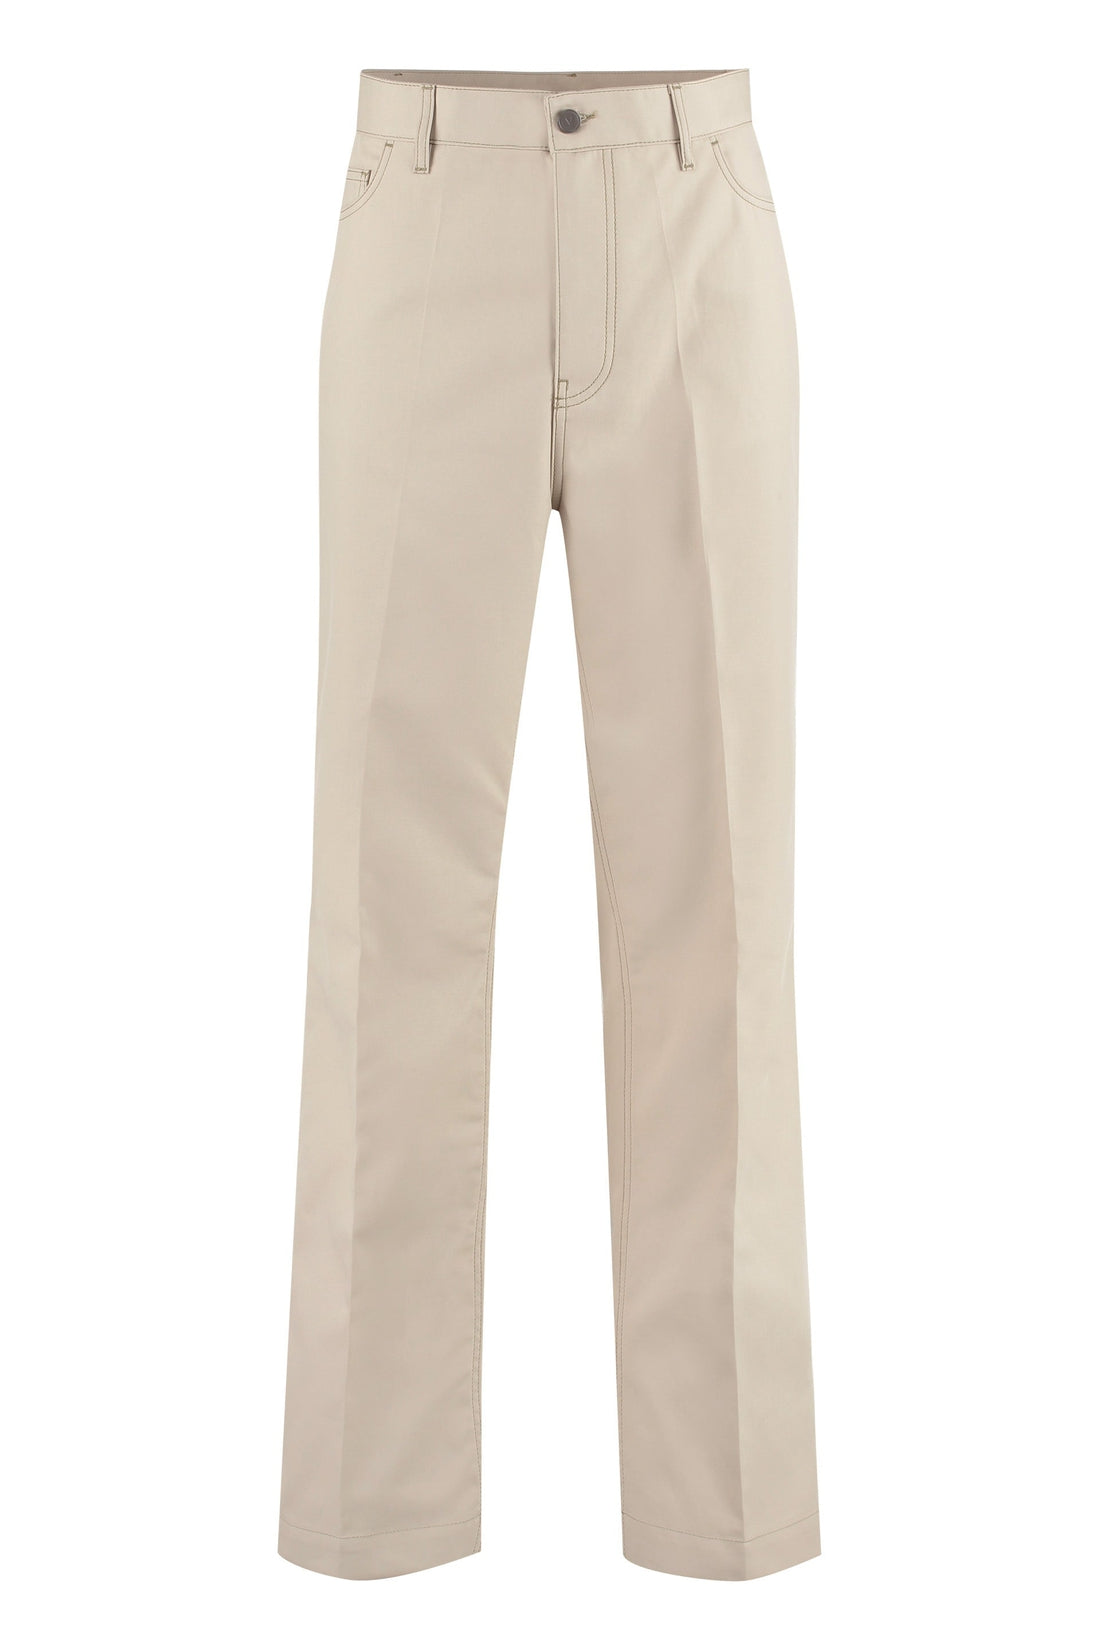 Valentino-OUTLET-SALE-Cotton trousers-ARCHIVIST